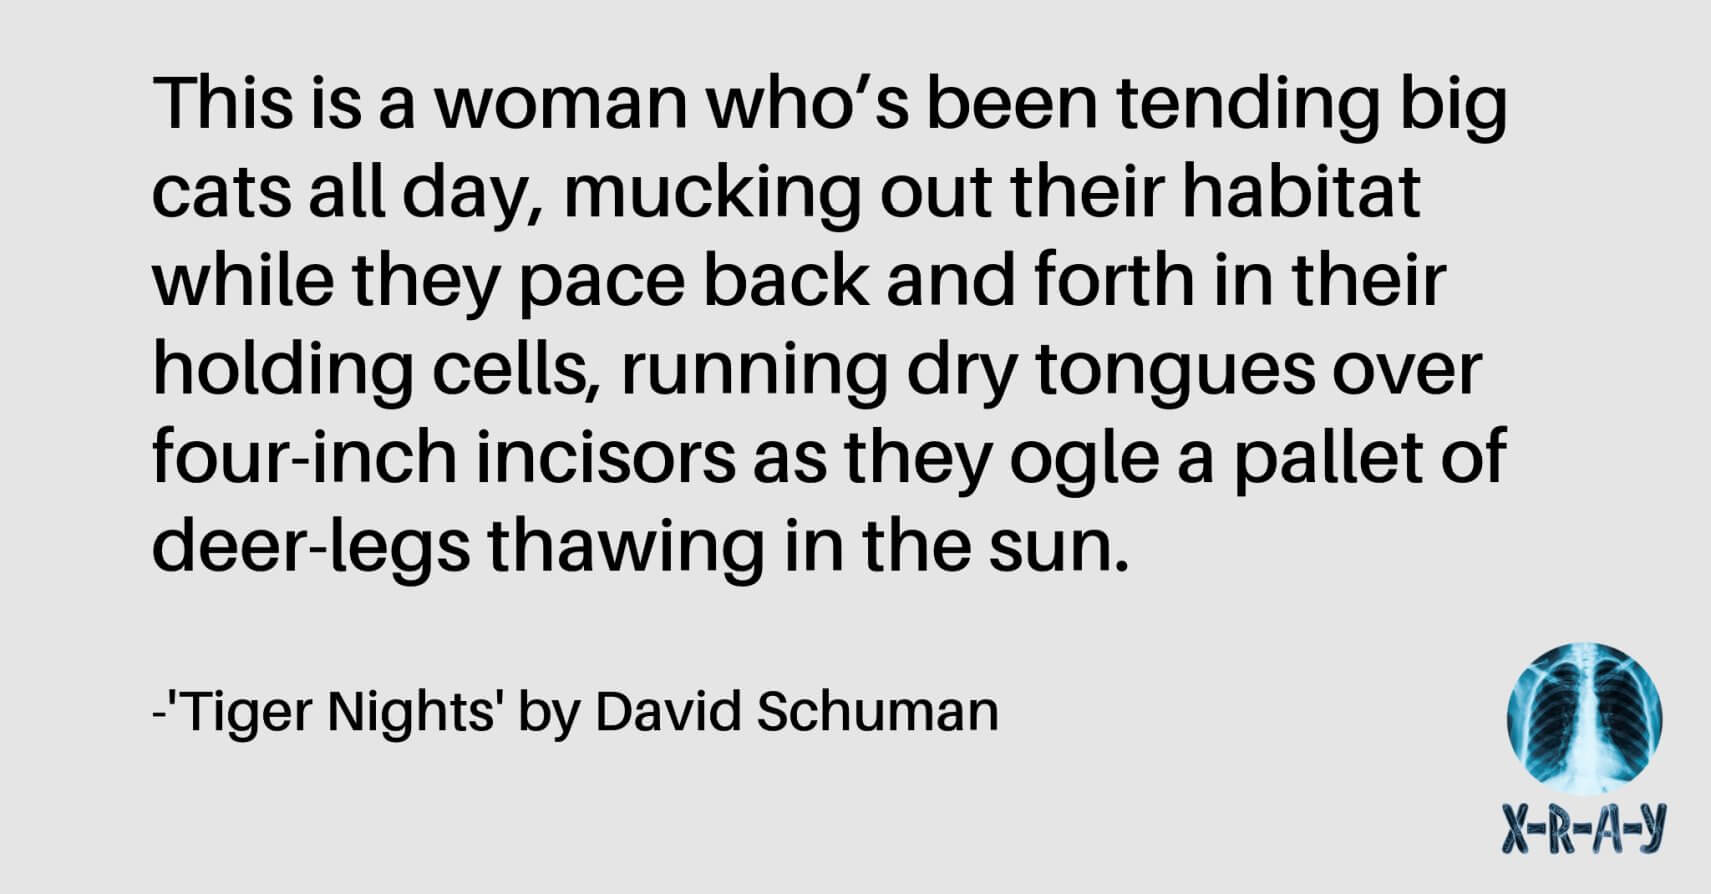 TIGER NIGHTS by David Schuman